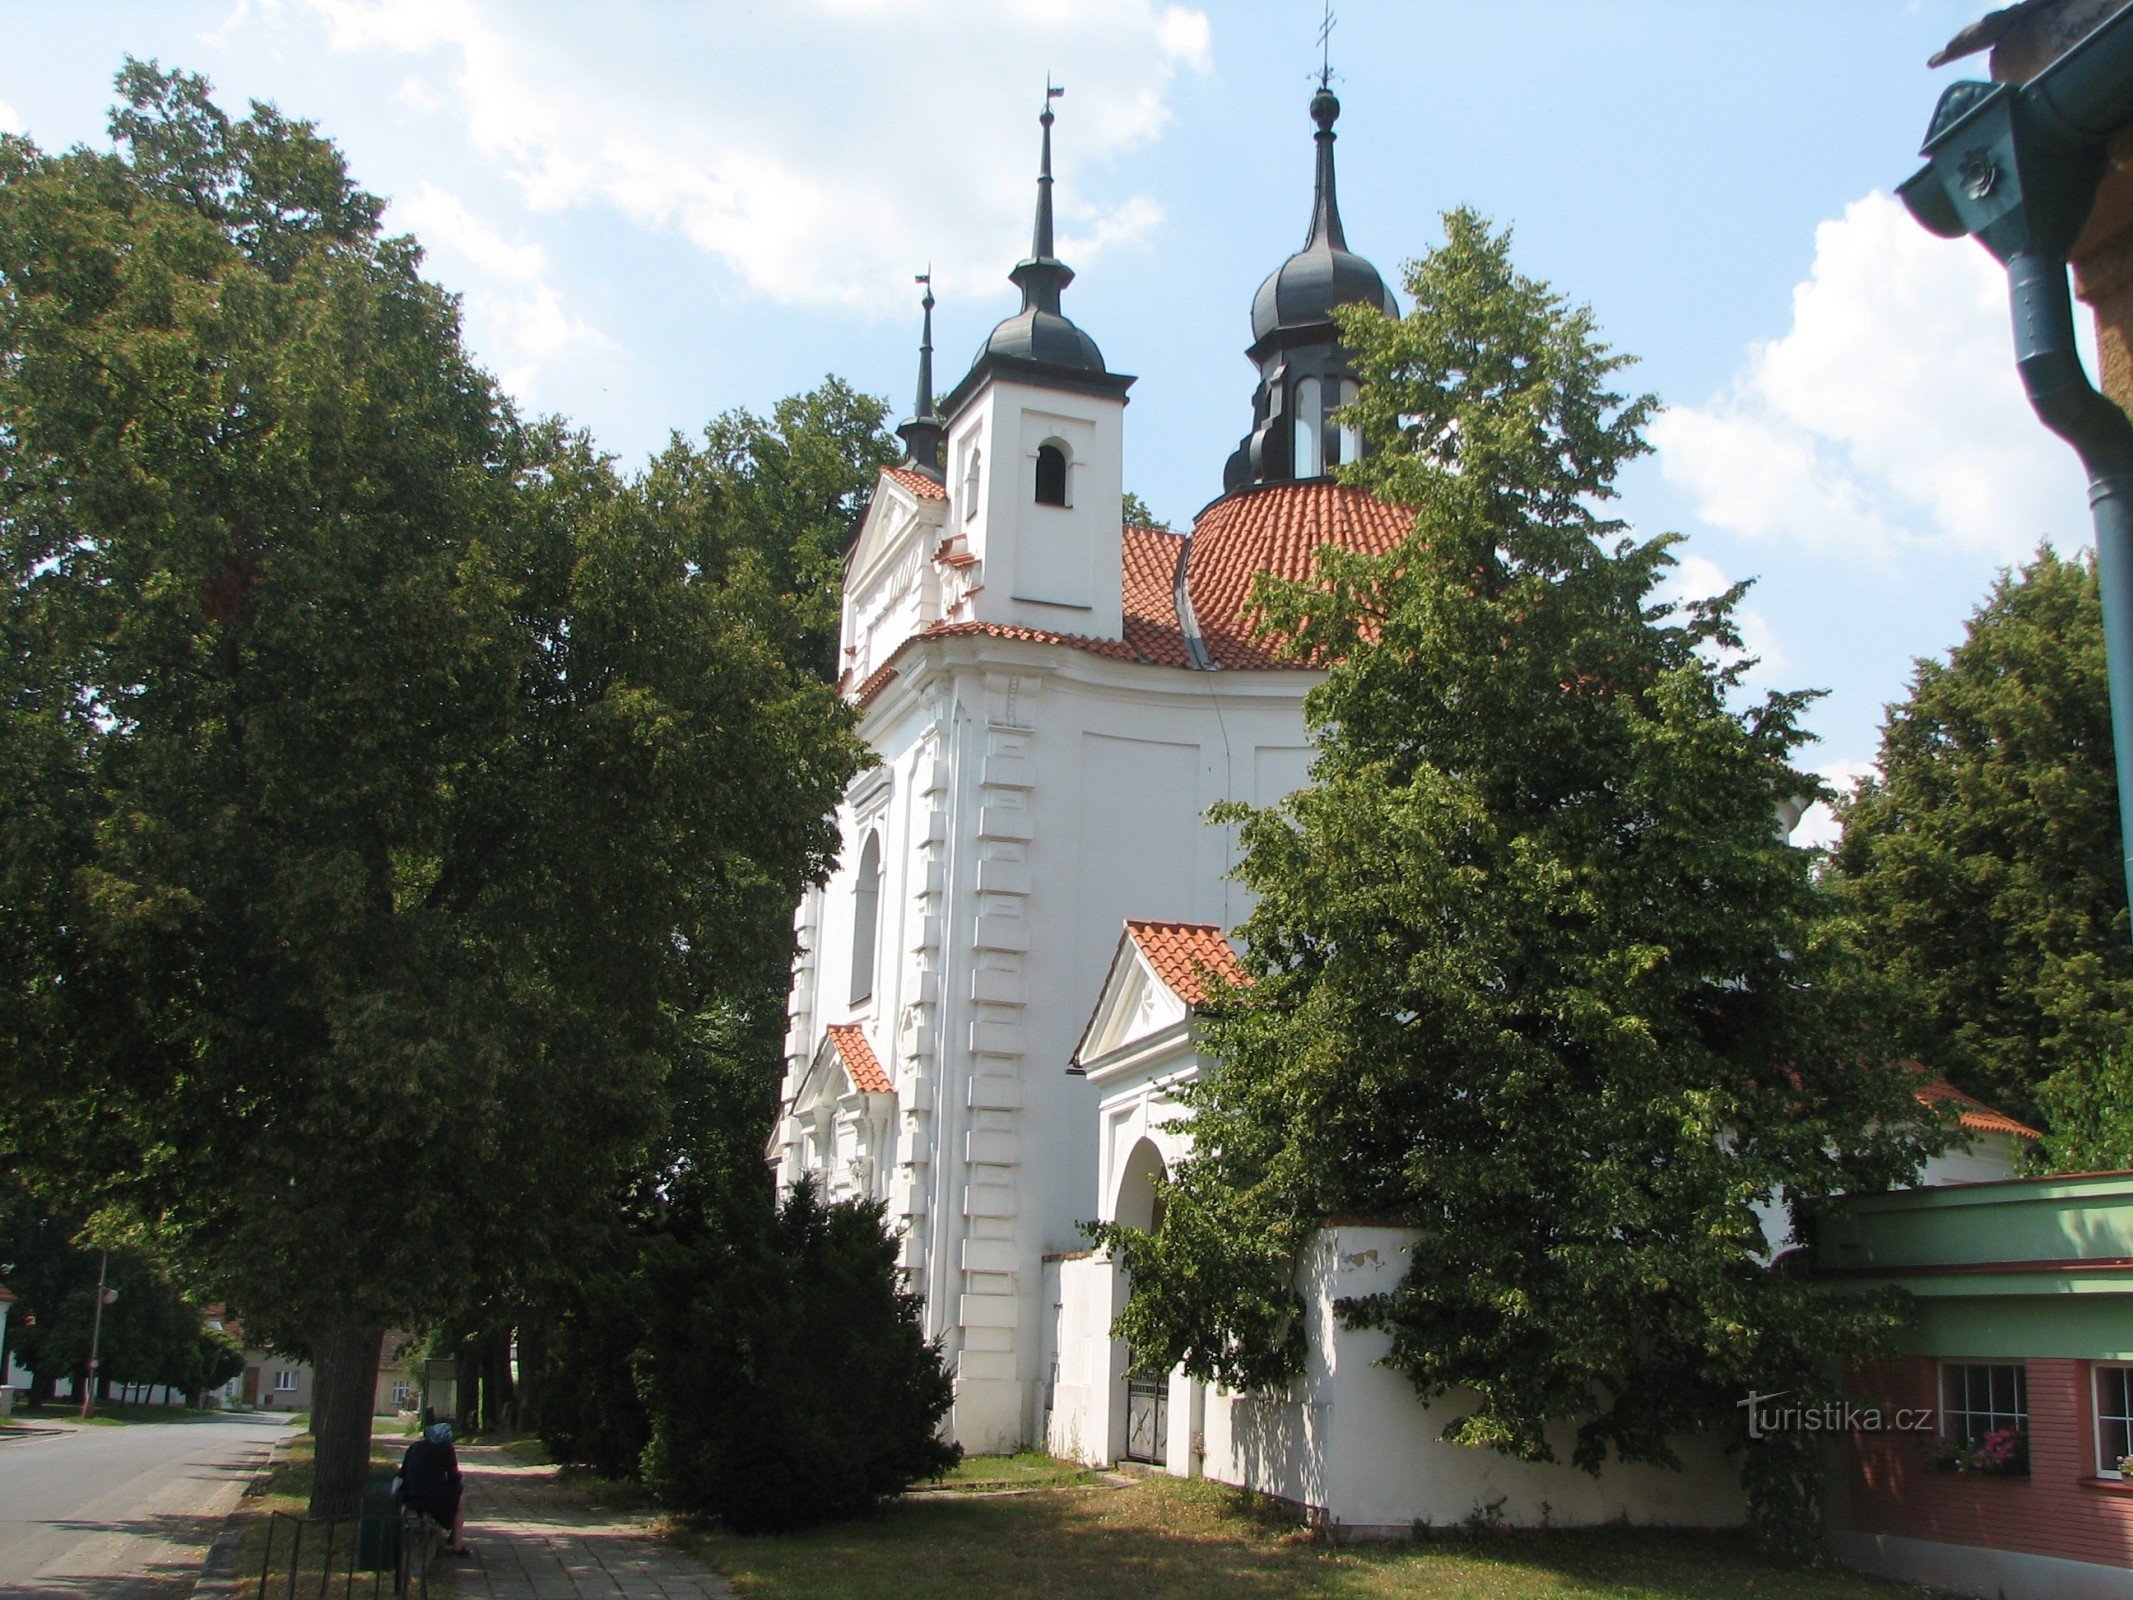 Church of St. Michal in Bechyn